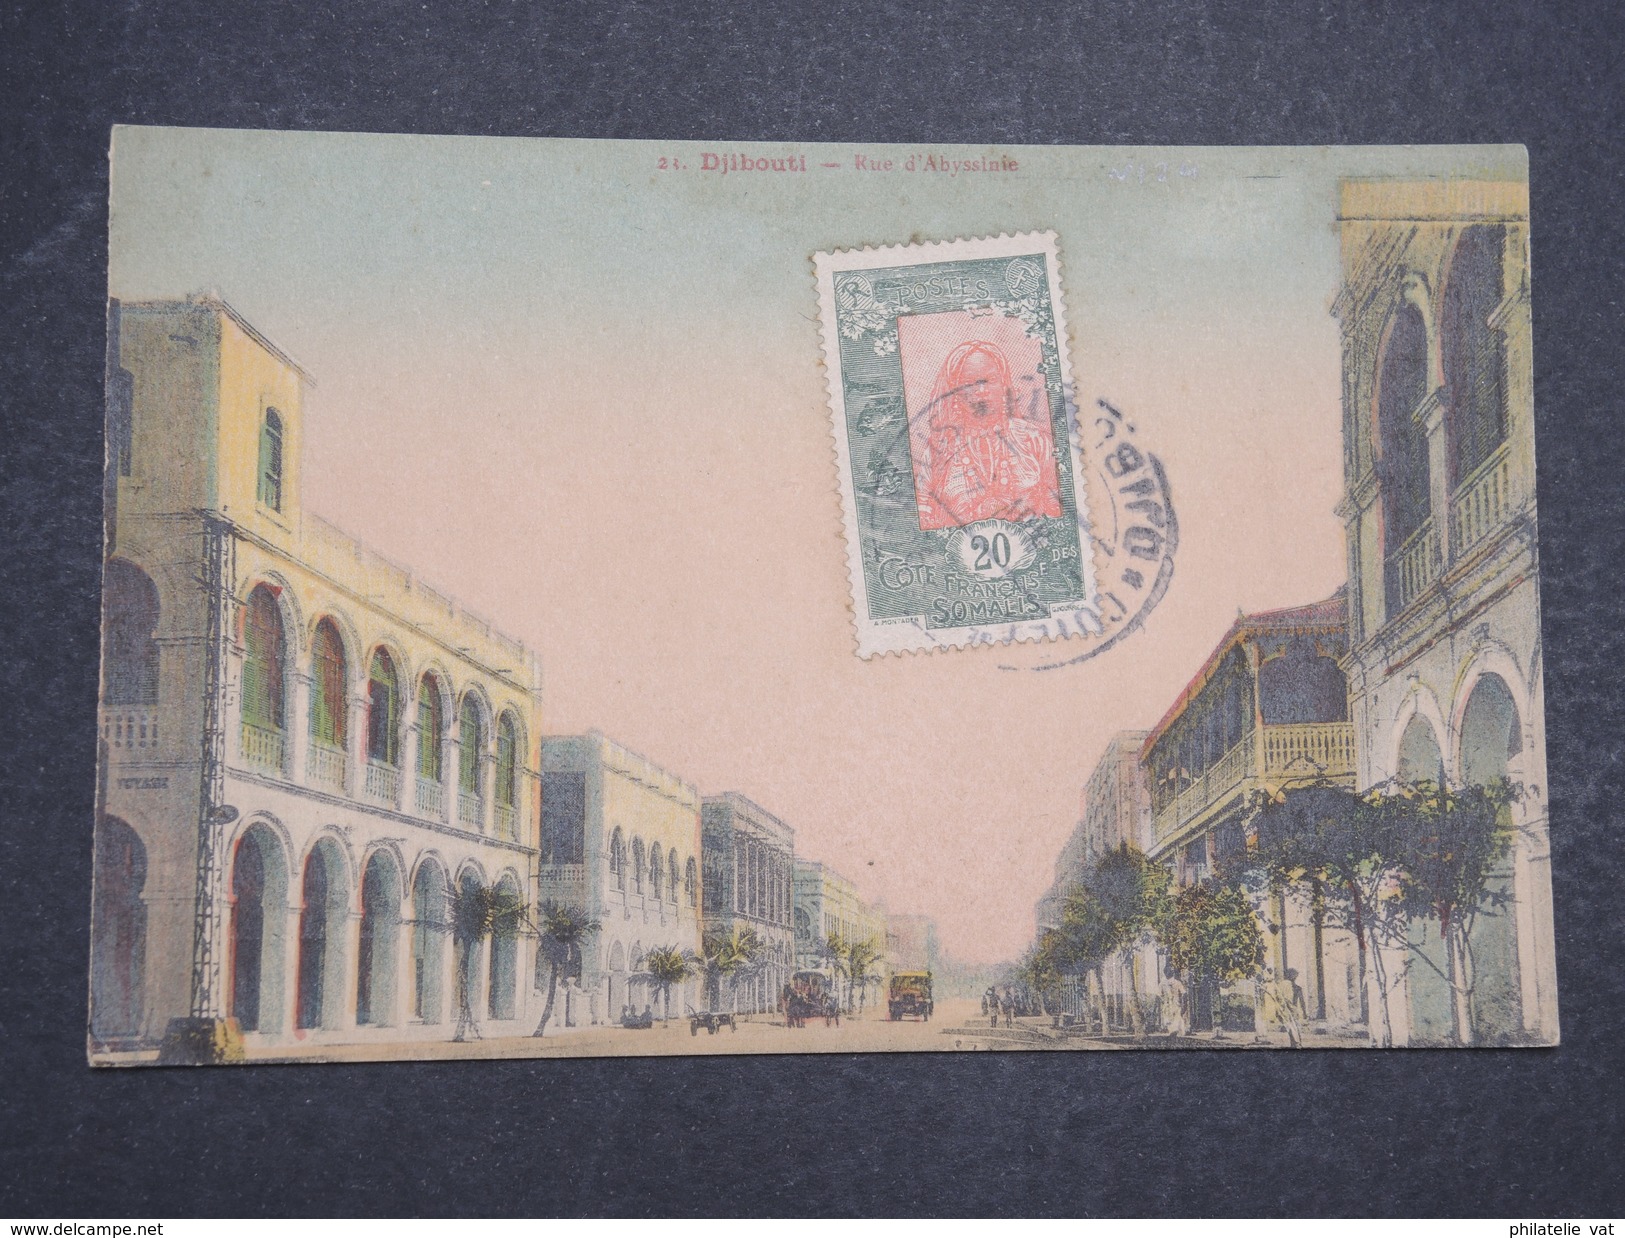 COTE FRANçAISE DES SOMALIS - Carte Postale Djibouti Pour Paris -Nov 1934 - P22098 - Briefe U. Dokumente